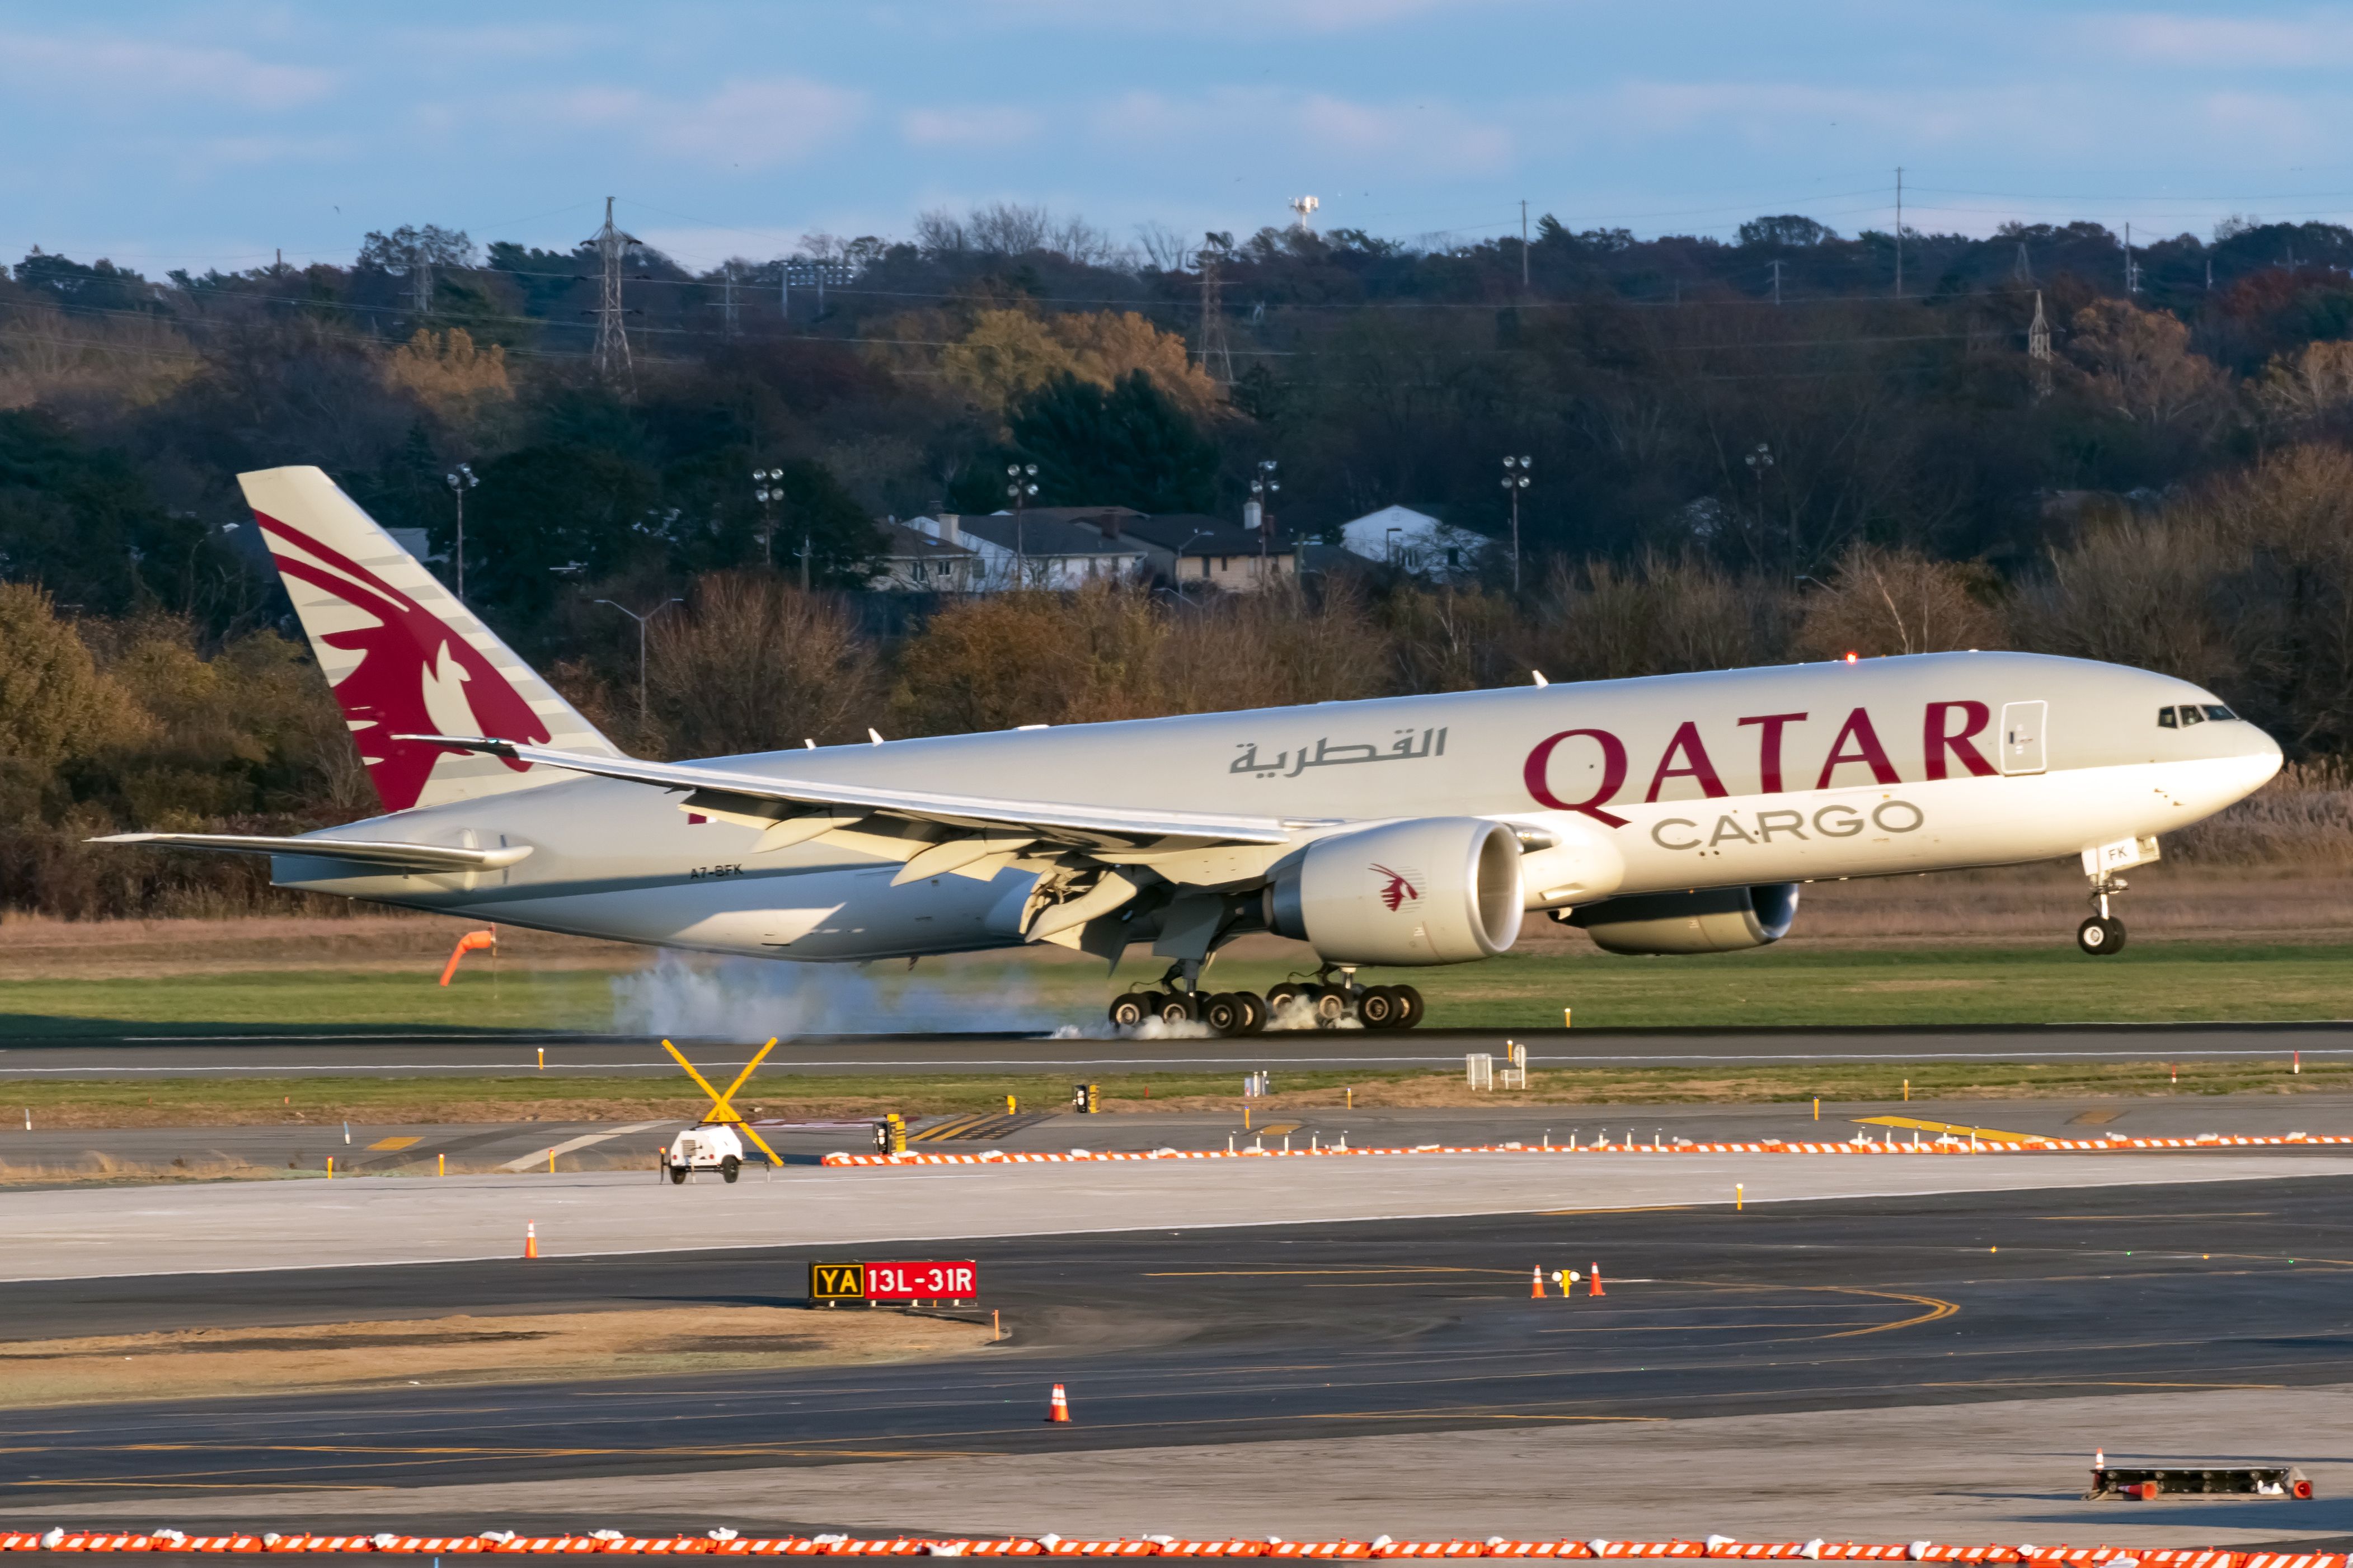 A Qatar Airways Cargo Boeing 777 as it lands on a runway.